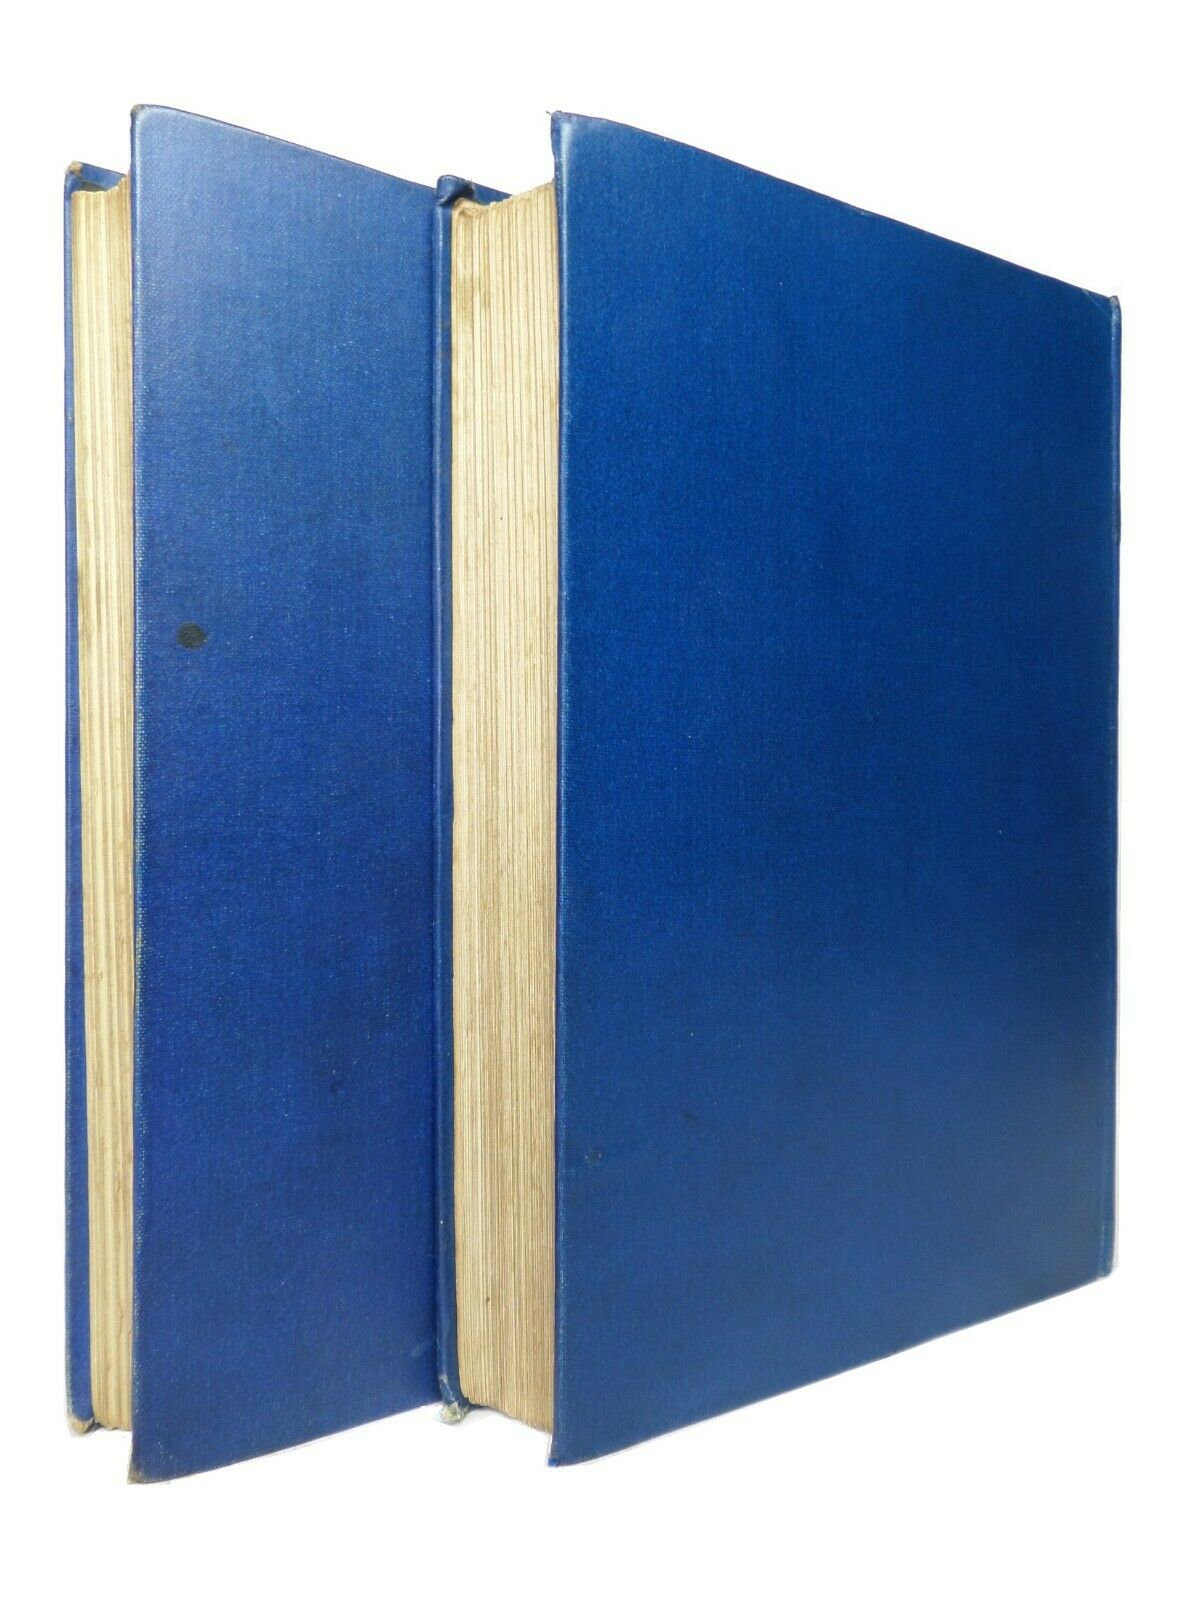 THE JUNGLE BOOK & SECOND JUNGLE BOOK BY RUDYARD KIPLING 1895 UNIFORM EDITIONS